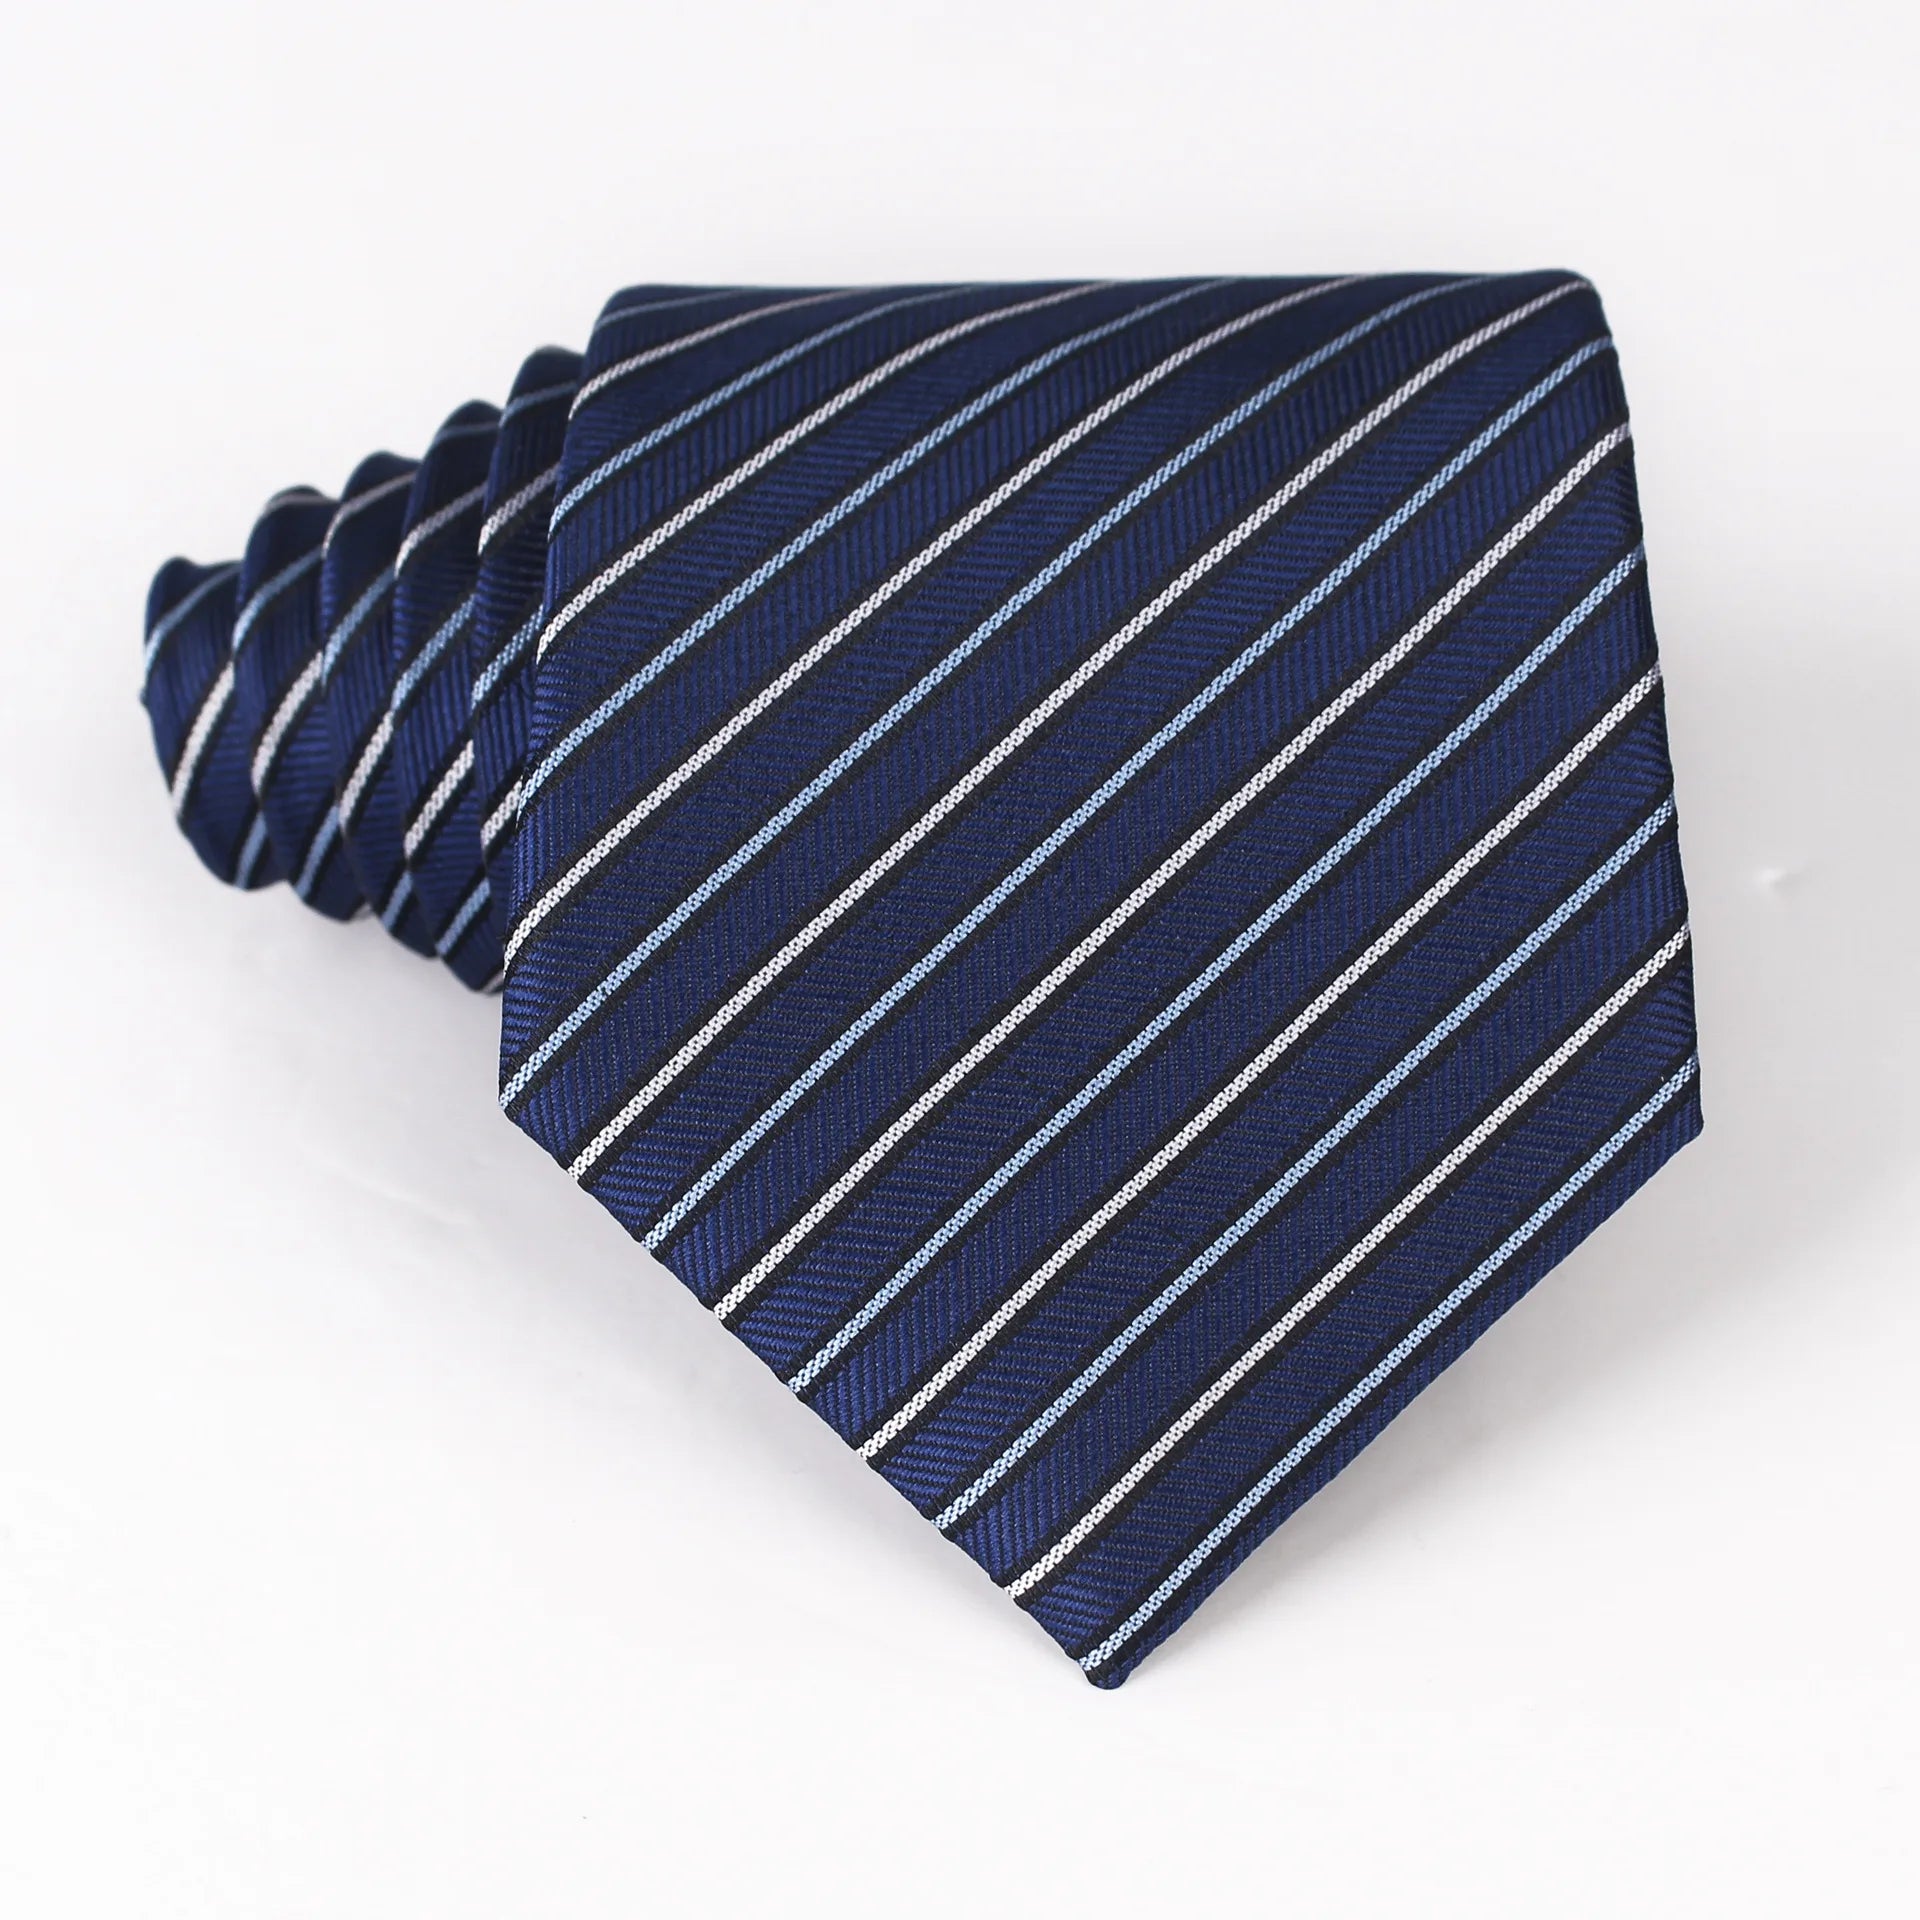 Navy with thin stripes tie   8cm